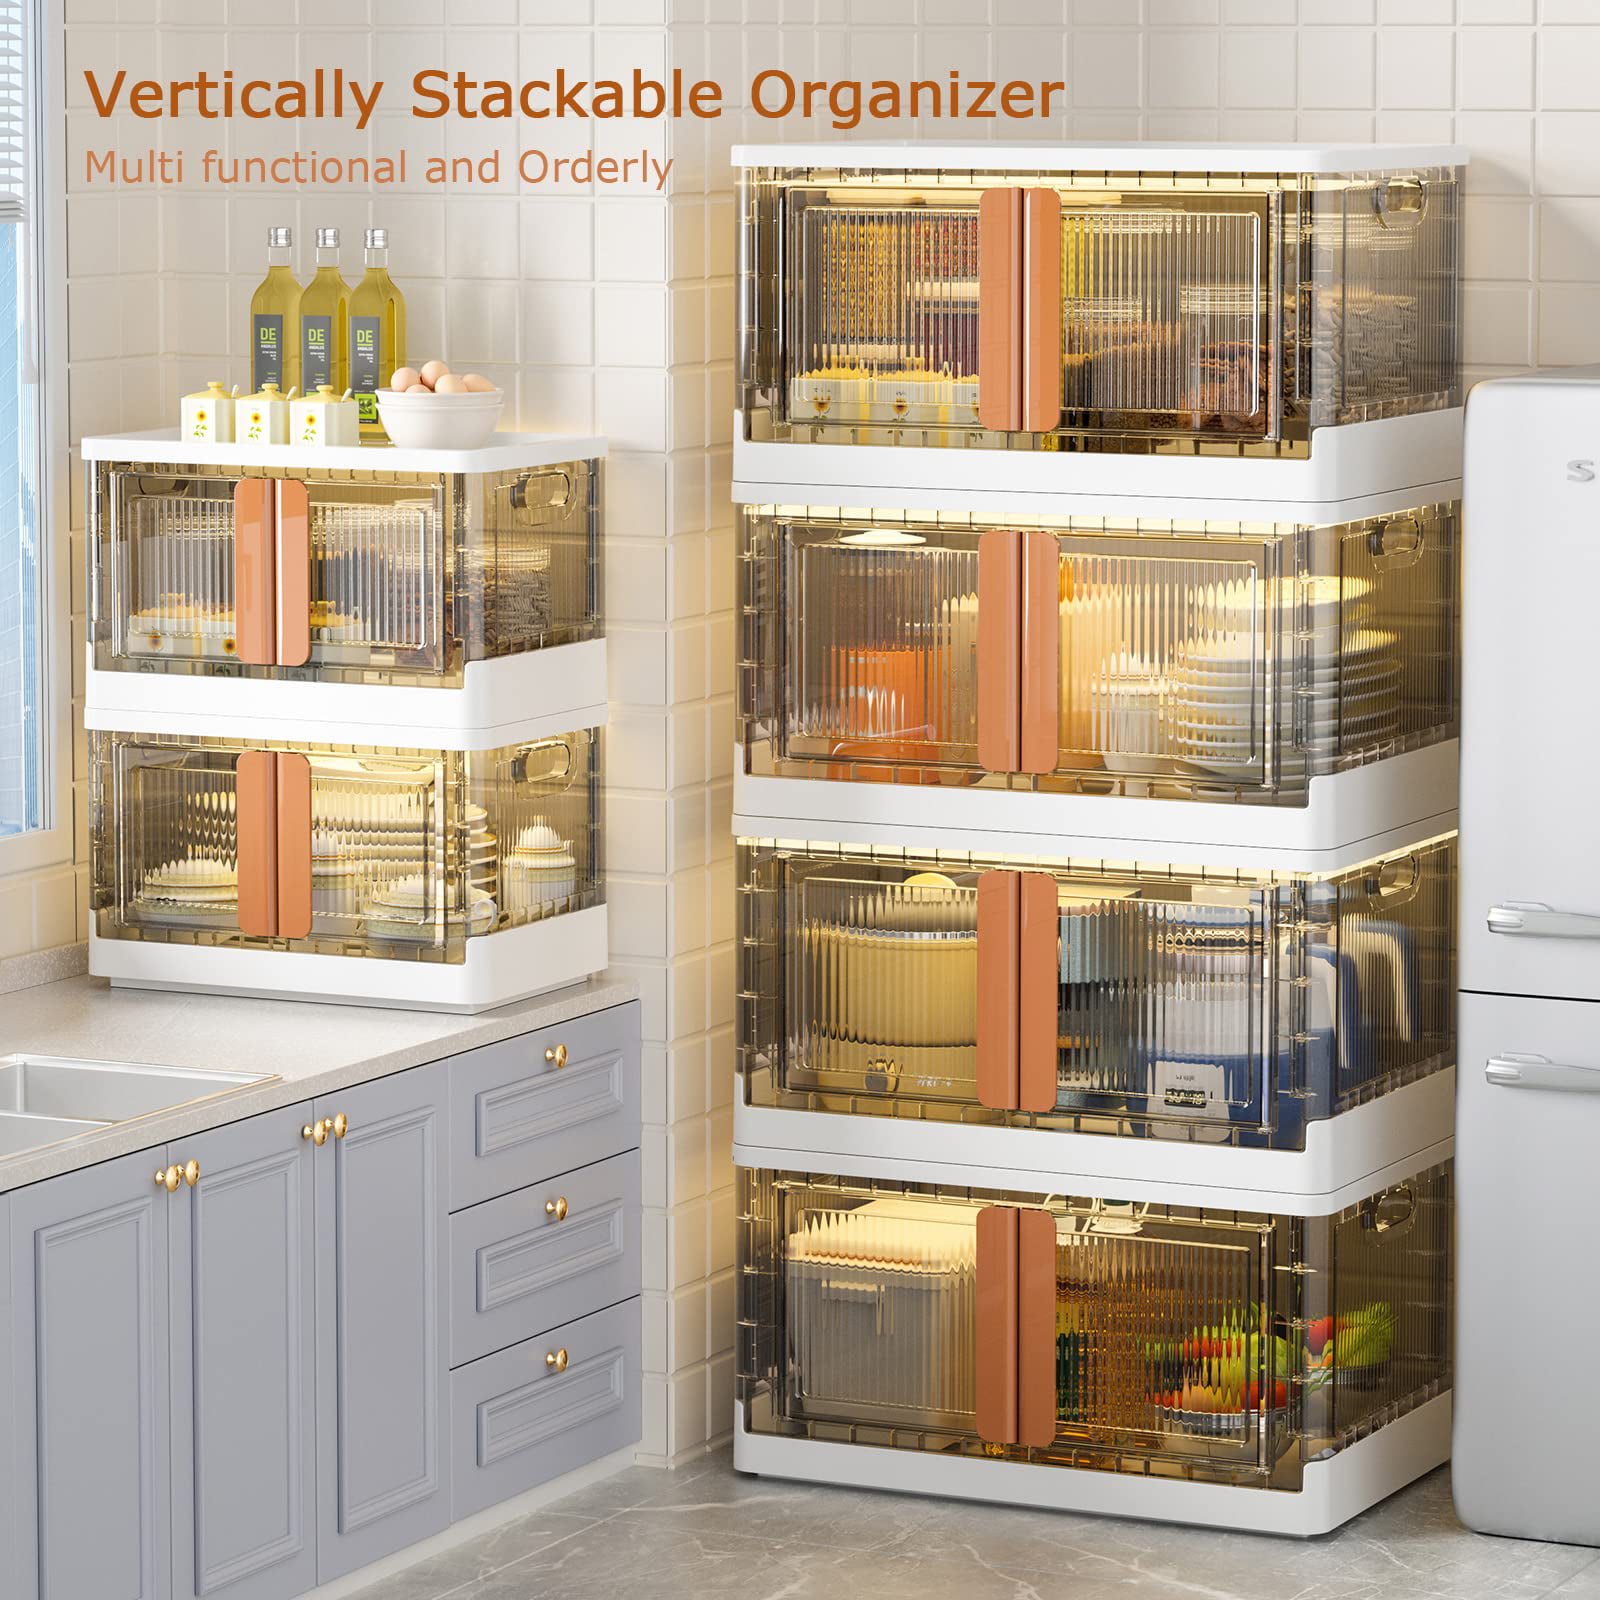 Kootek 4 Pack Clear Pantry Organization and Storage Bins, Freezer Orga